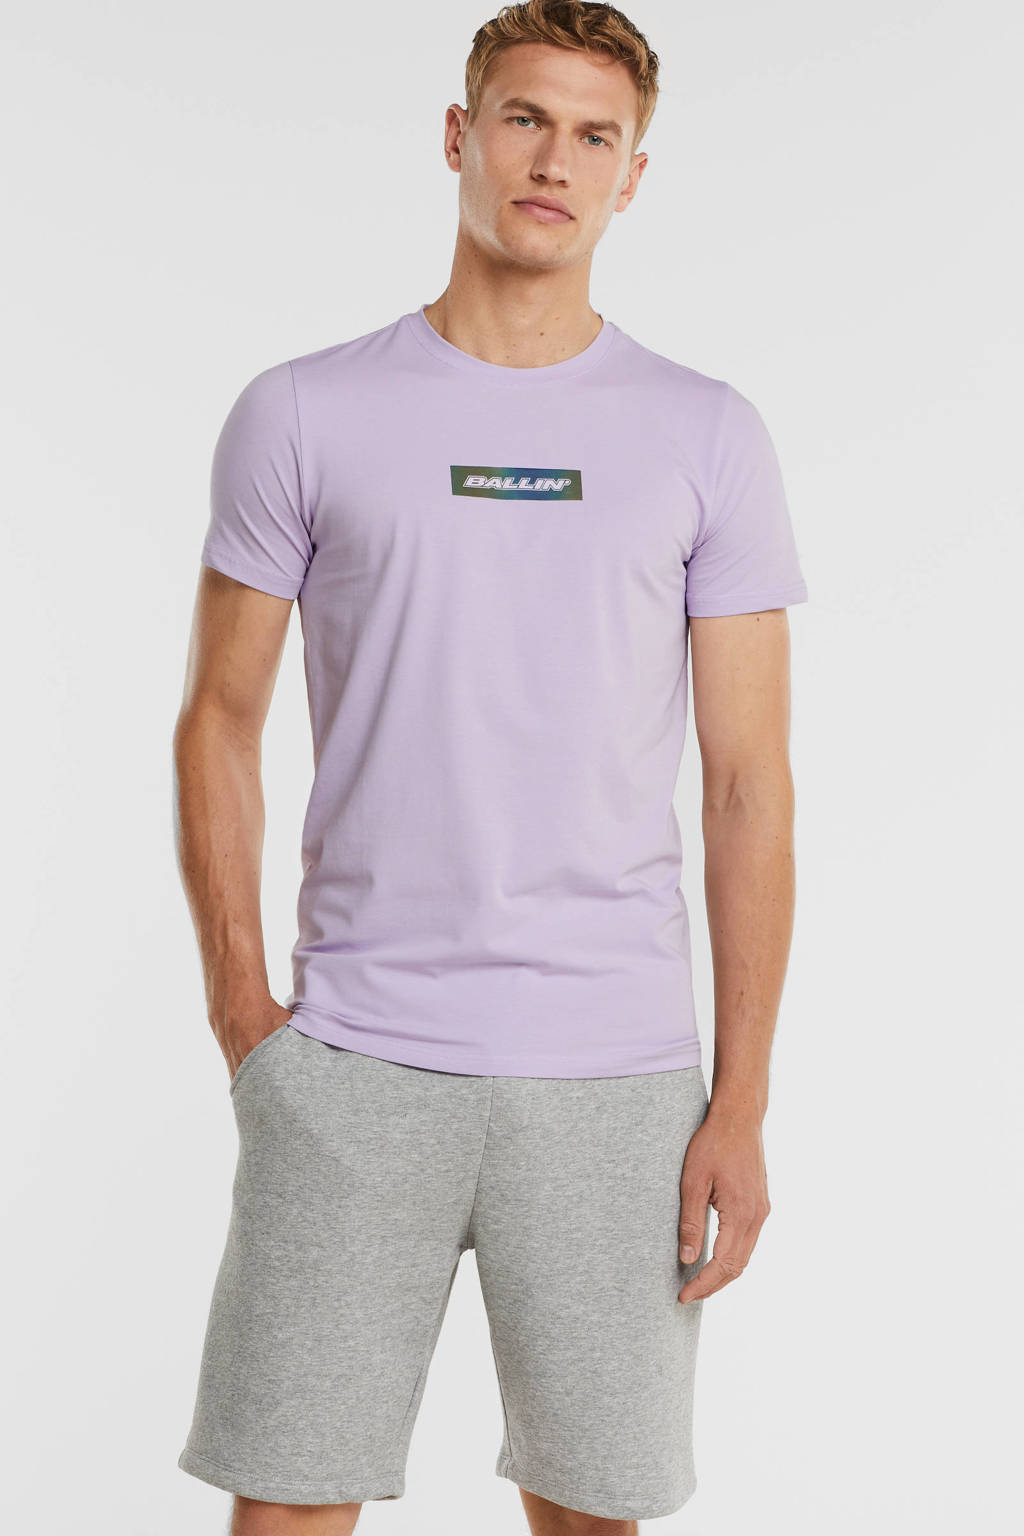 Ballin T-shirt met logo lilac